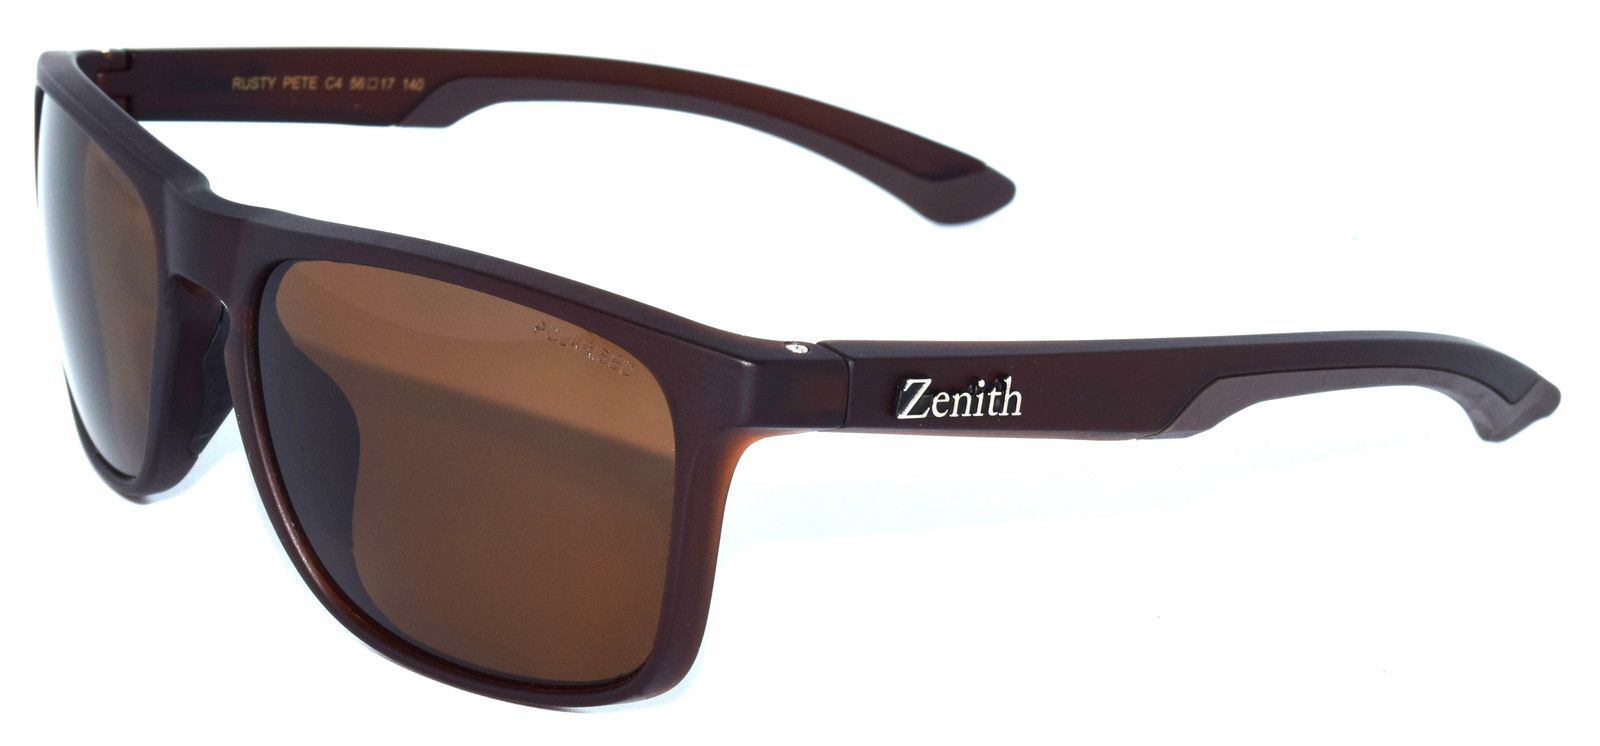 Zenith Rusty Pete C4 Dark Brown / Brown Polarised Lenses